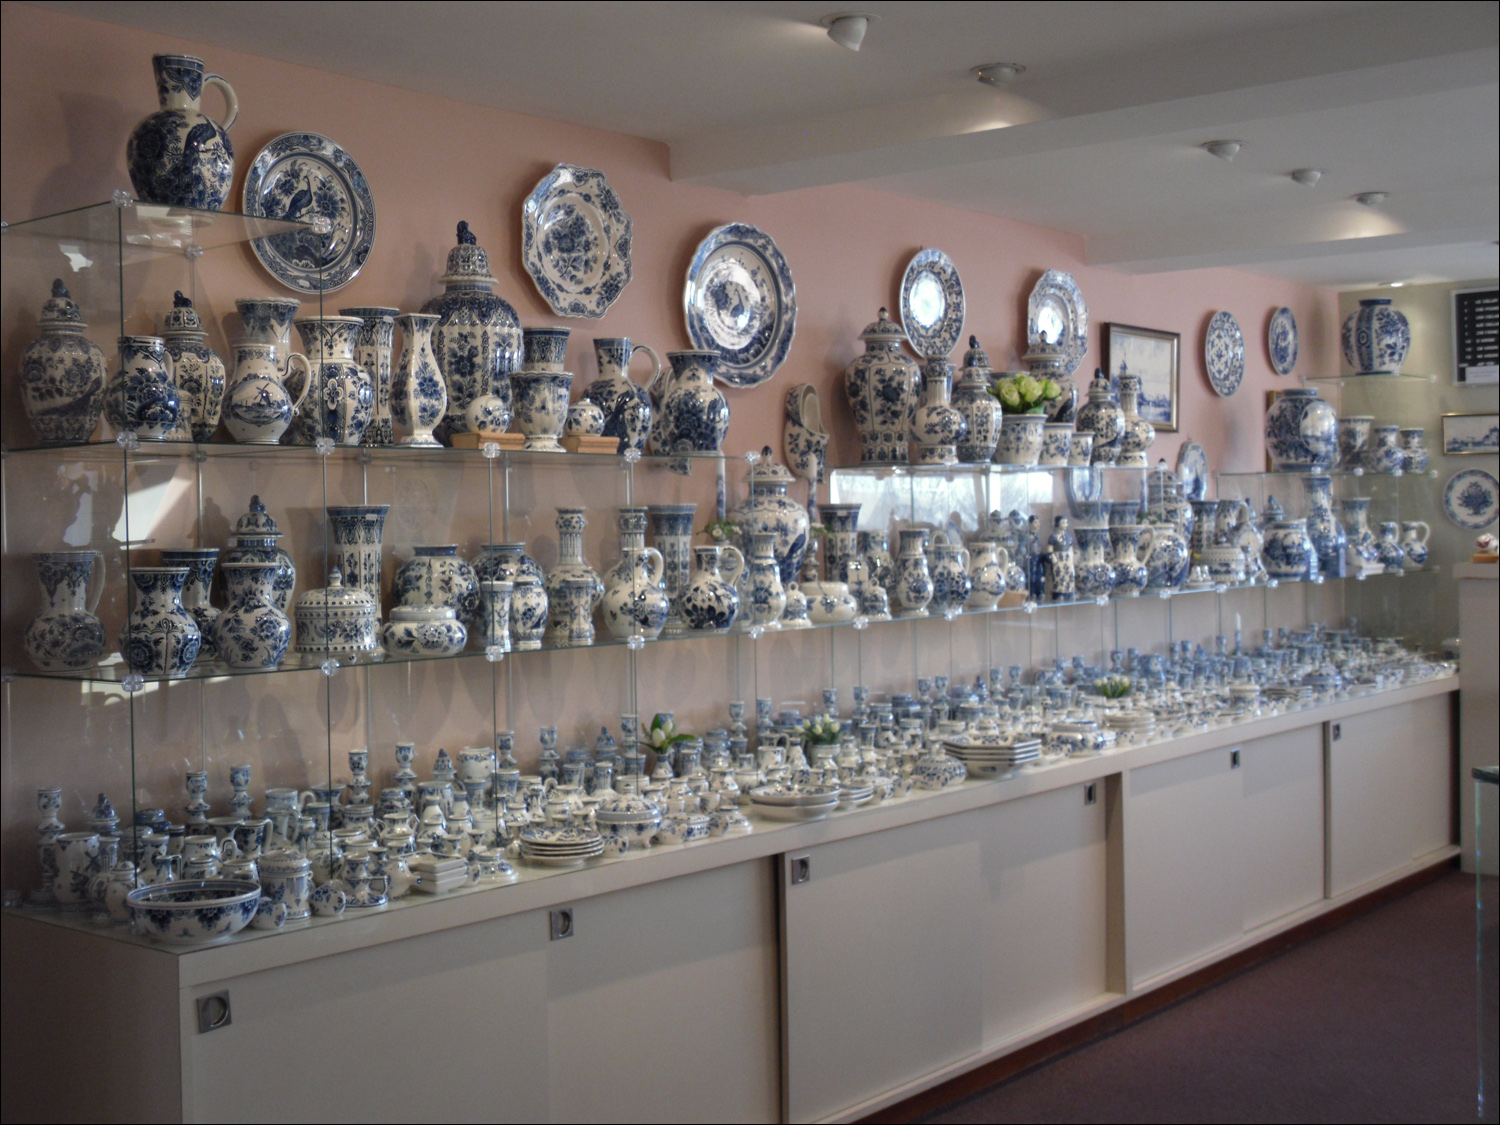 Delfts Pauw pottery store